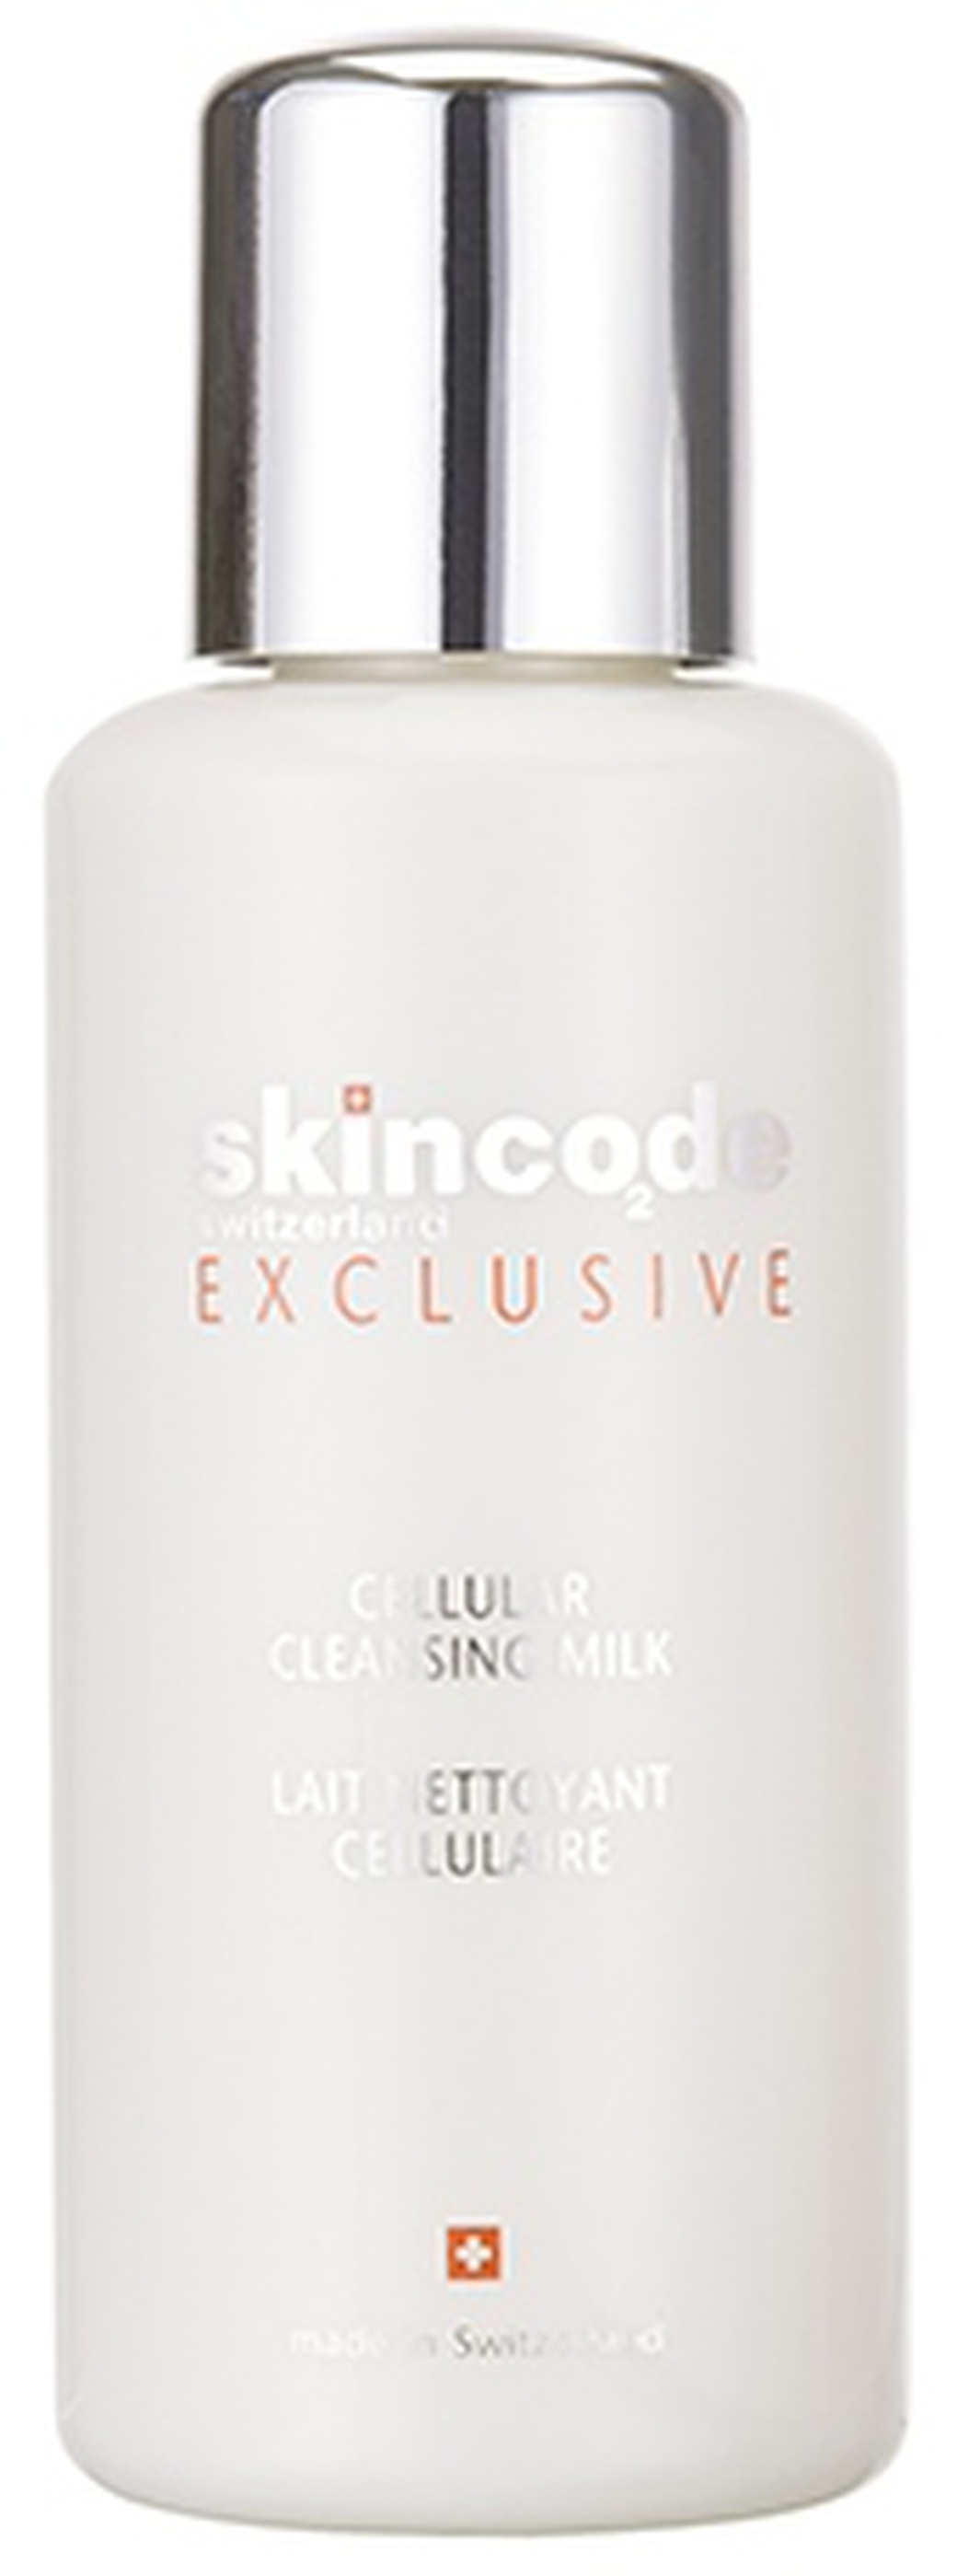 SkinCode Exclusive клеточное очищающее молочко, 200 мл фото